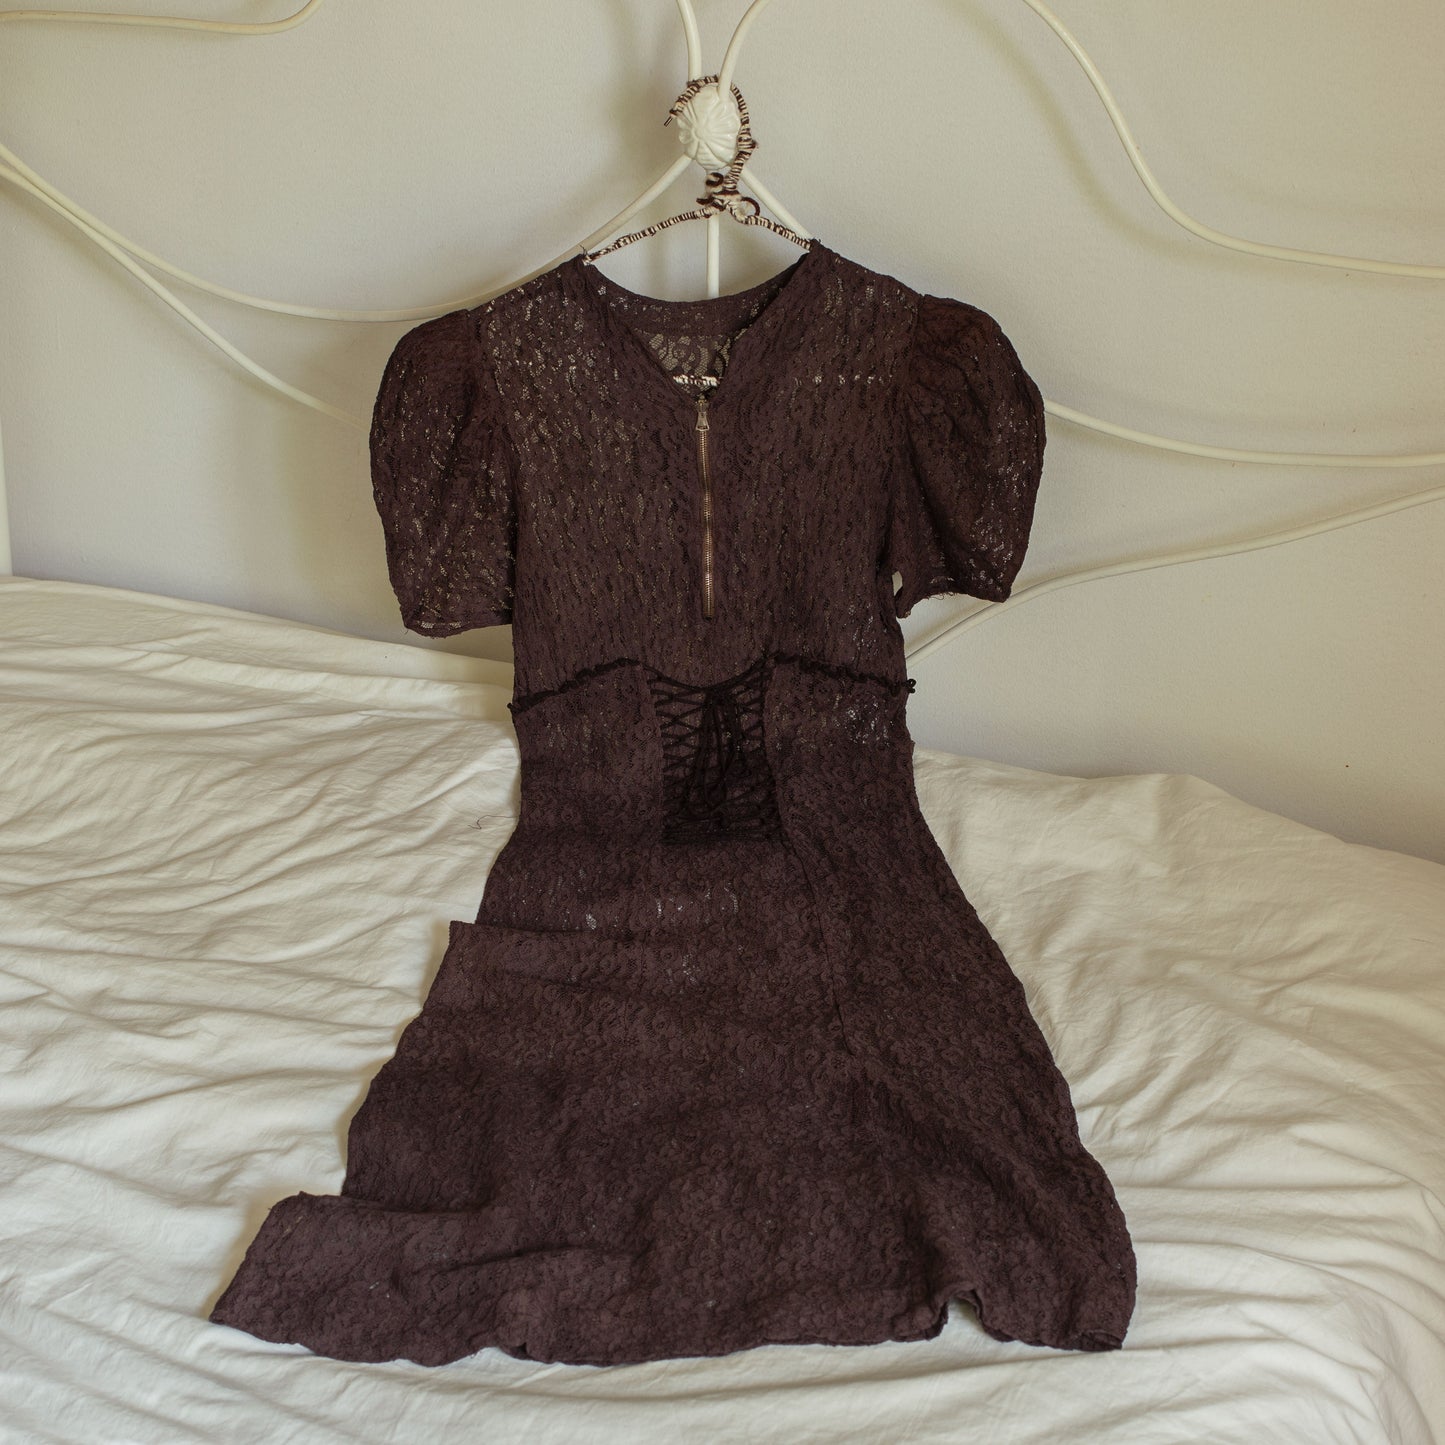 Reworked Vintage 1930s Corset Zipper Brown Lace Dress